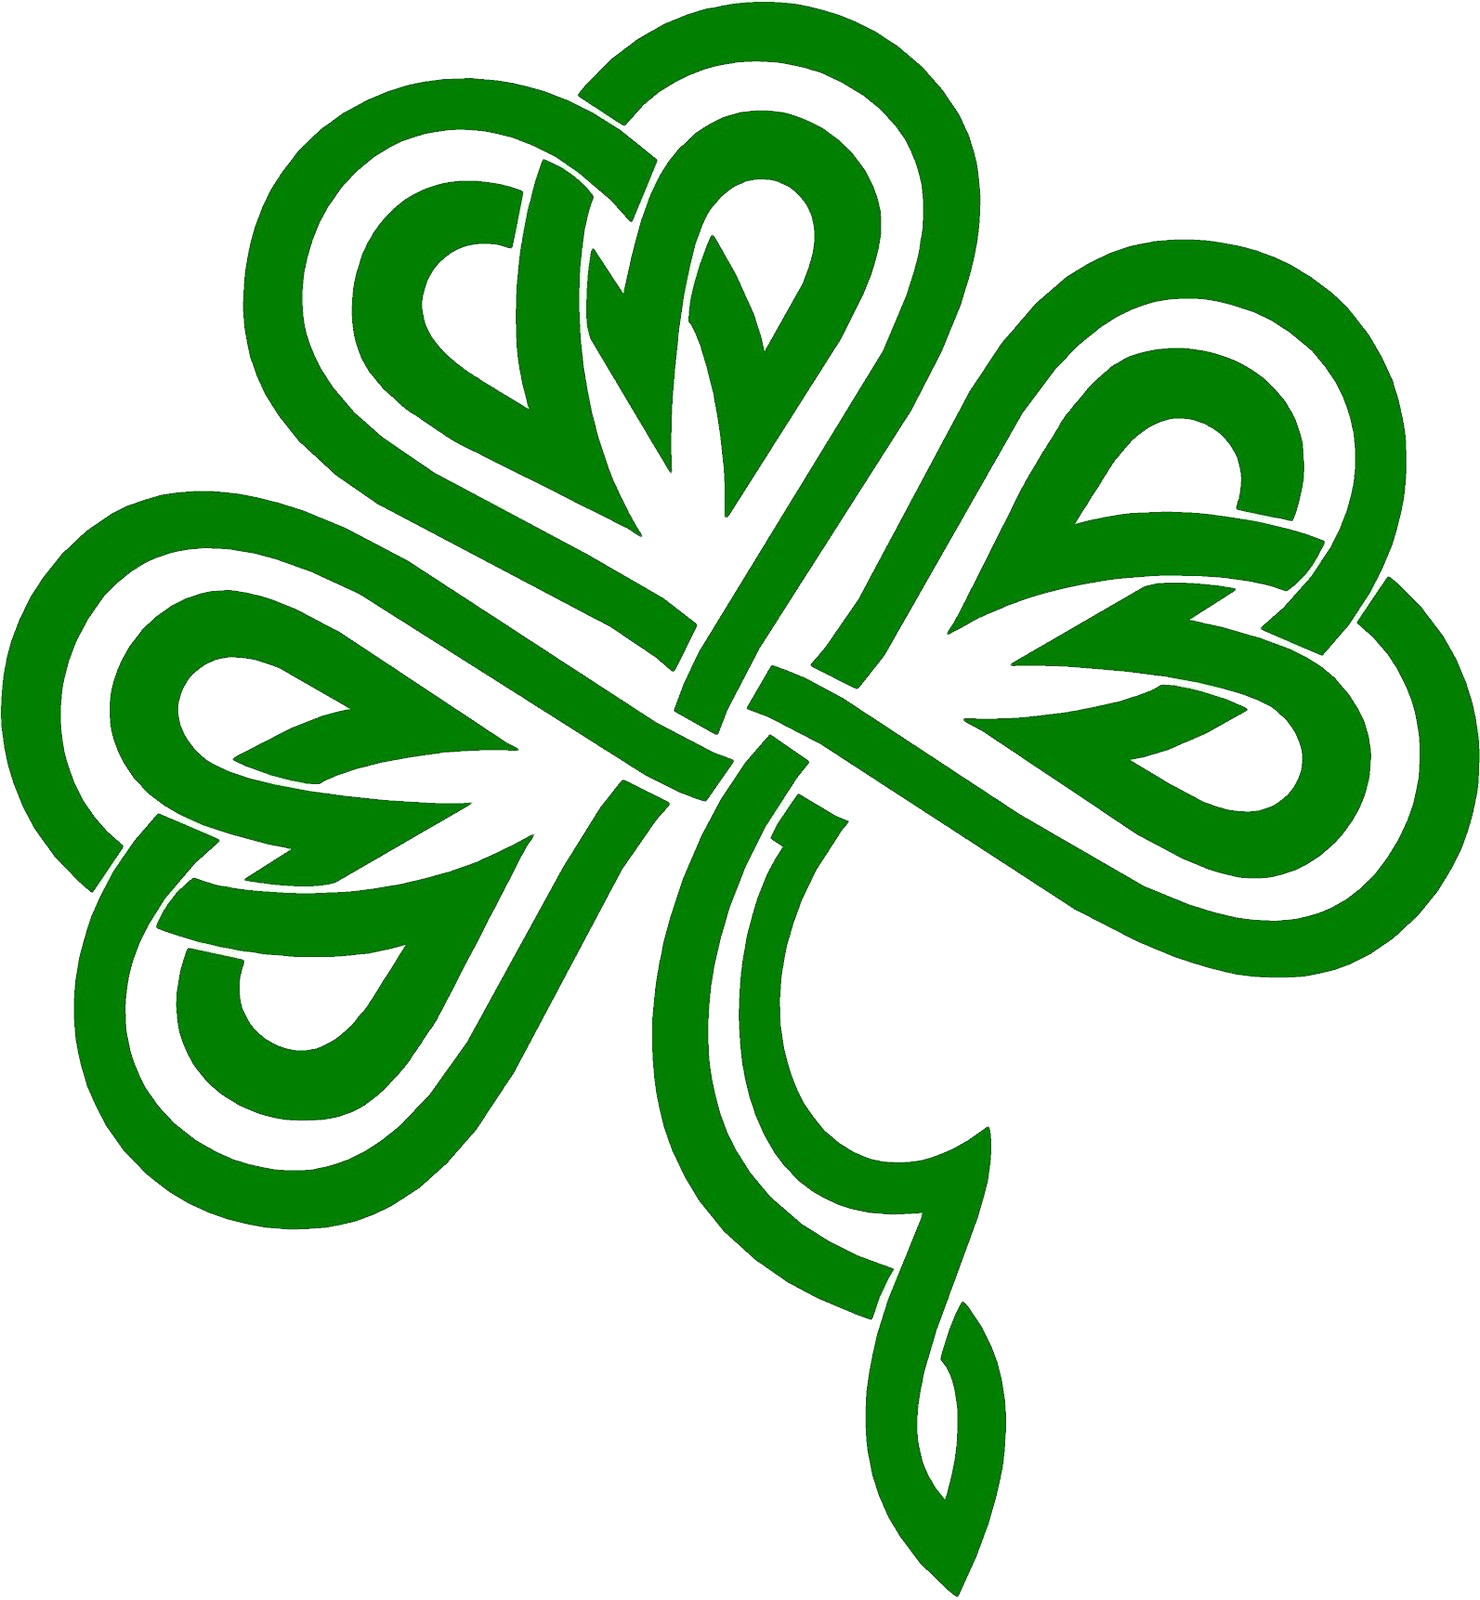 Republic Of Ireland Shamrock Celtic Knot Saint Patrick's - Republic Of Ireland Shamrock Celtic Knot Saint Patrick's (1480x1600)